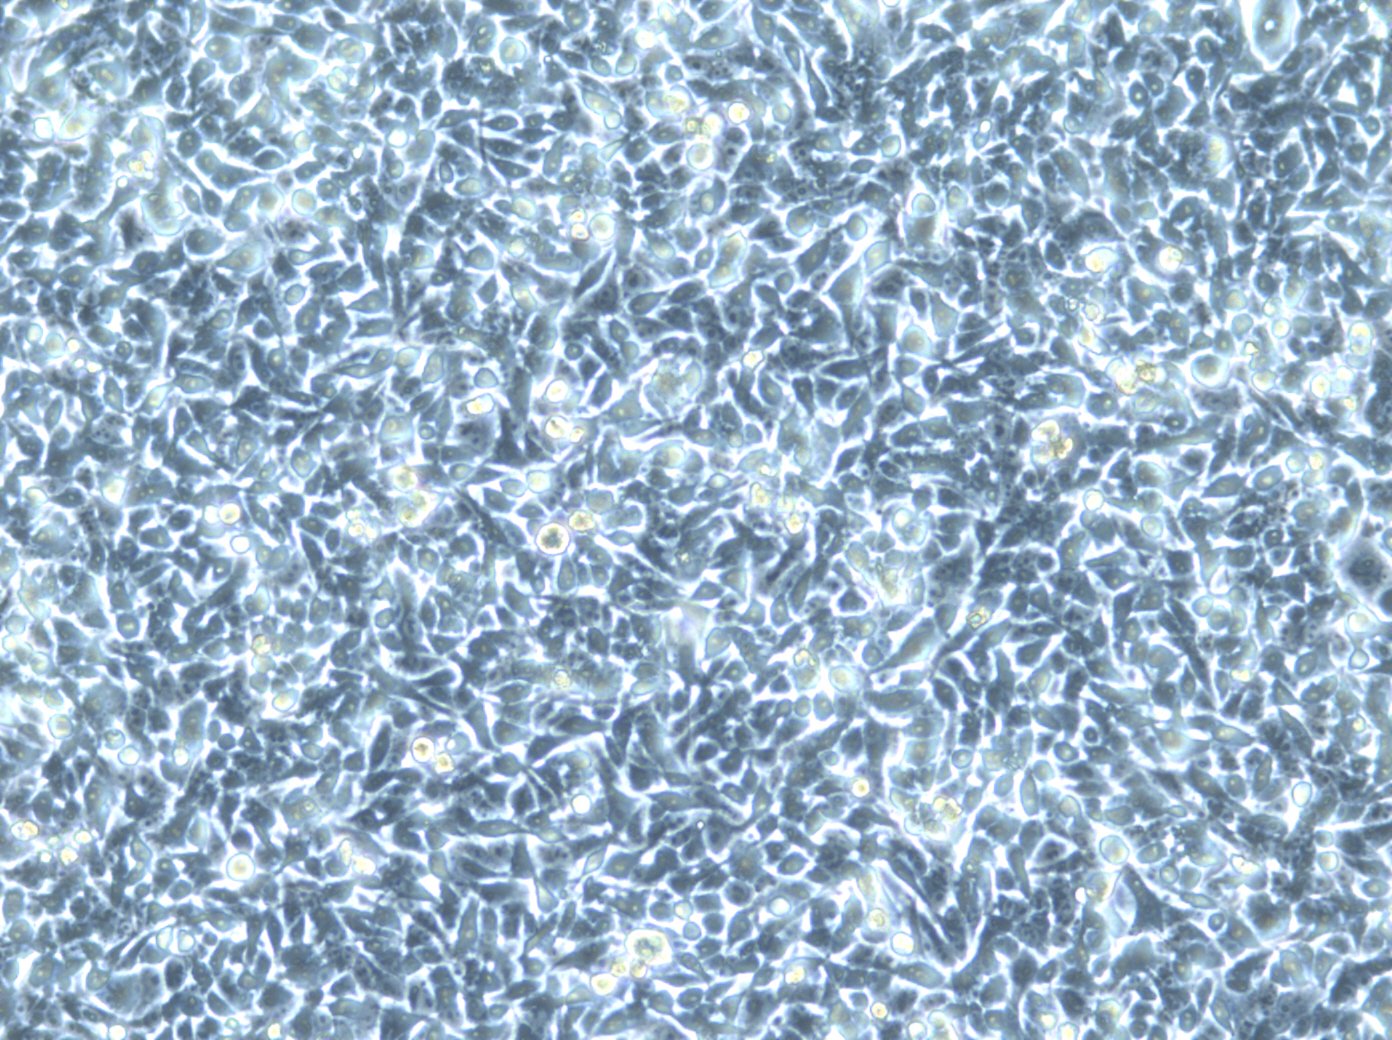 HK EGFP-LaminA/H2B-mCherry Cells